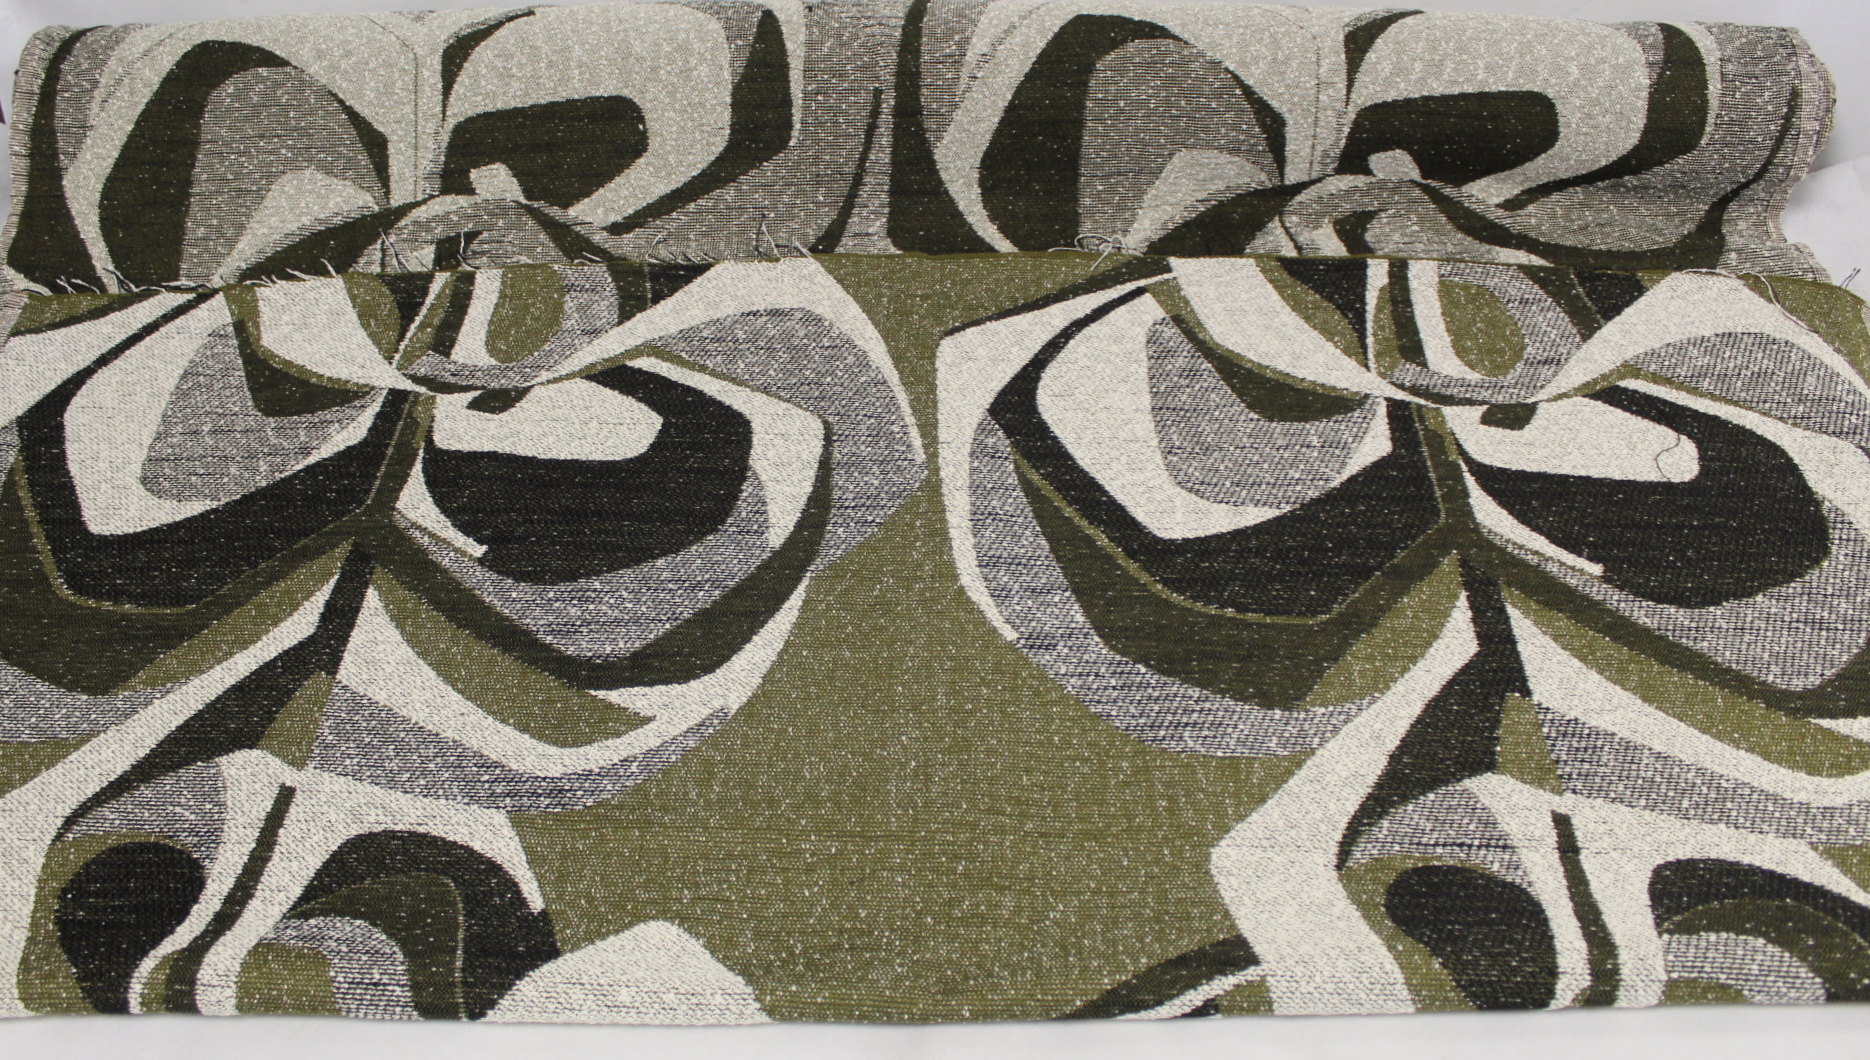 Roll of John Wright for Edinburgh Weavers "Kabadi" jacquard weave fabric in dark olive green and